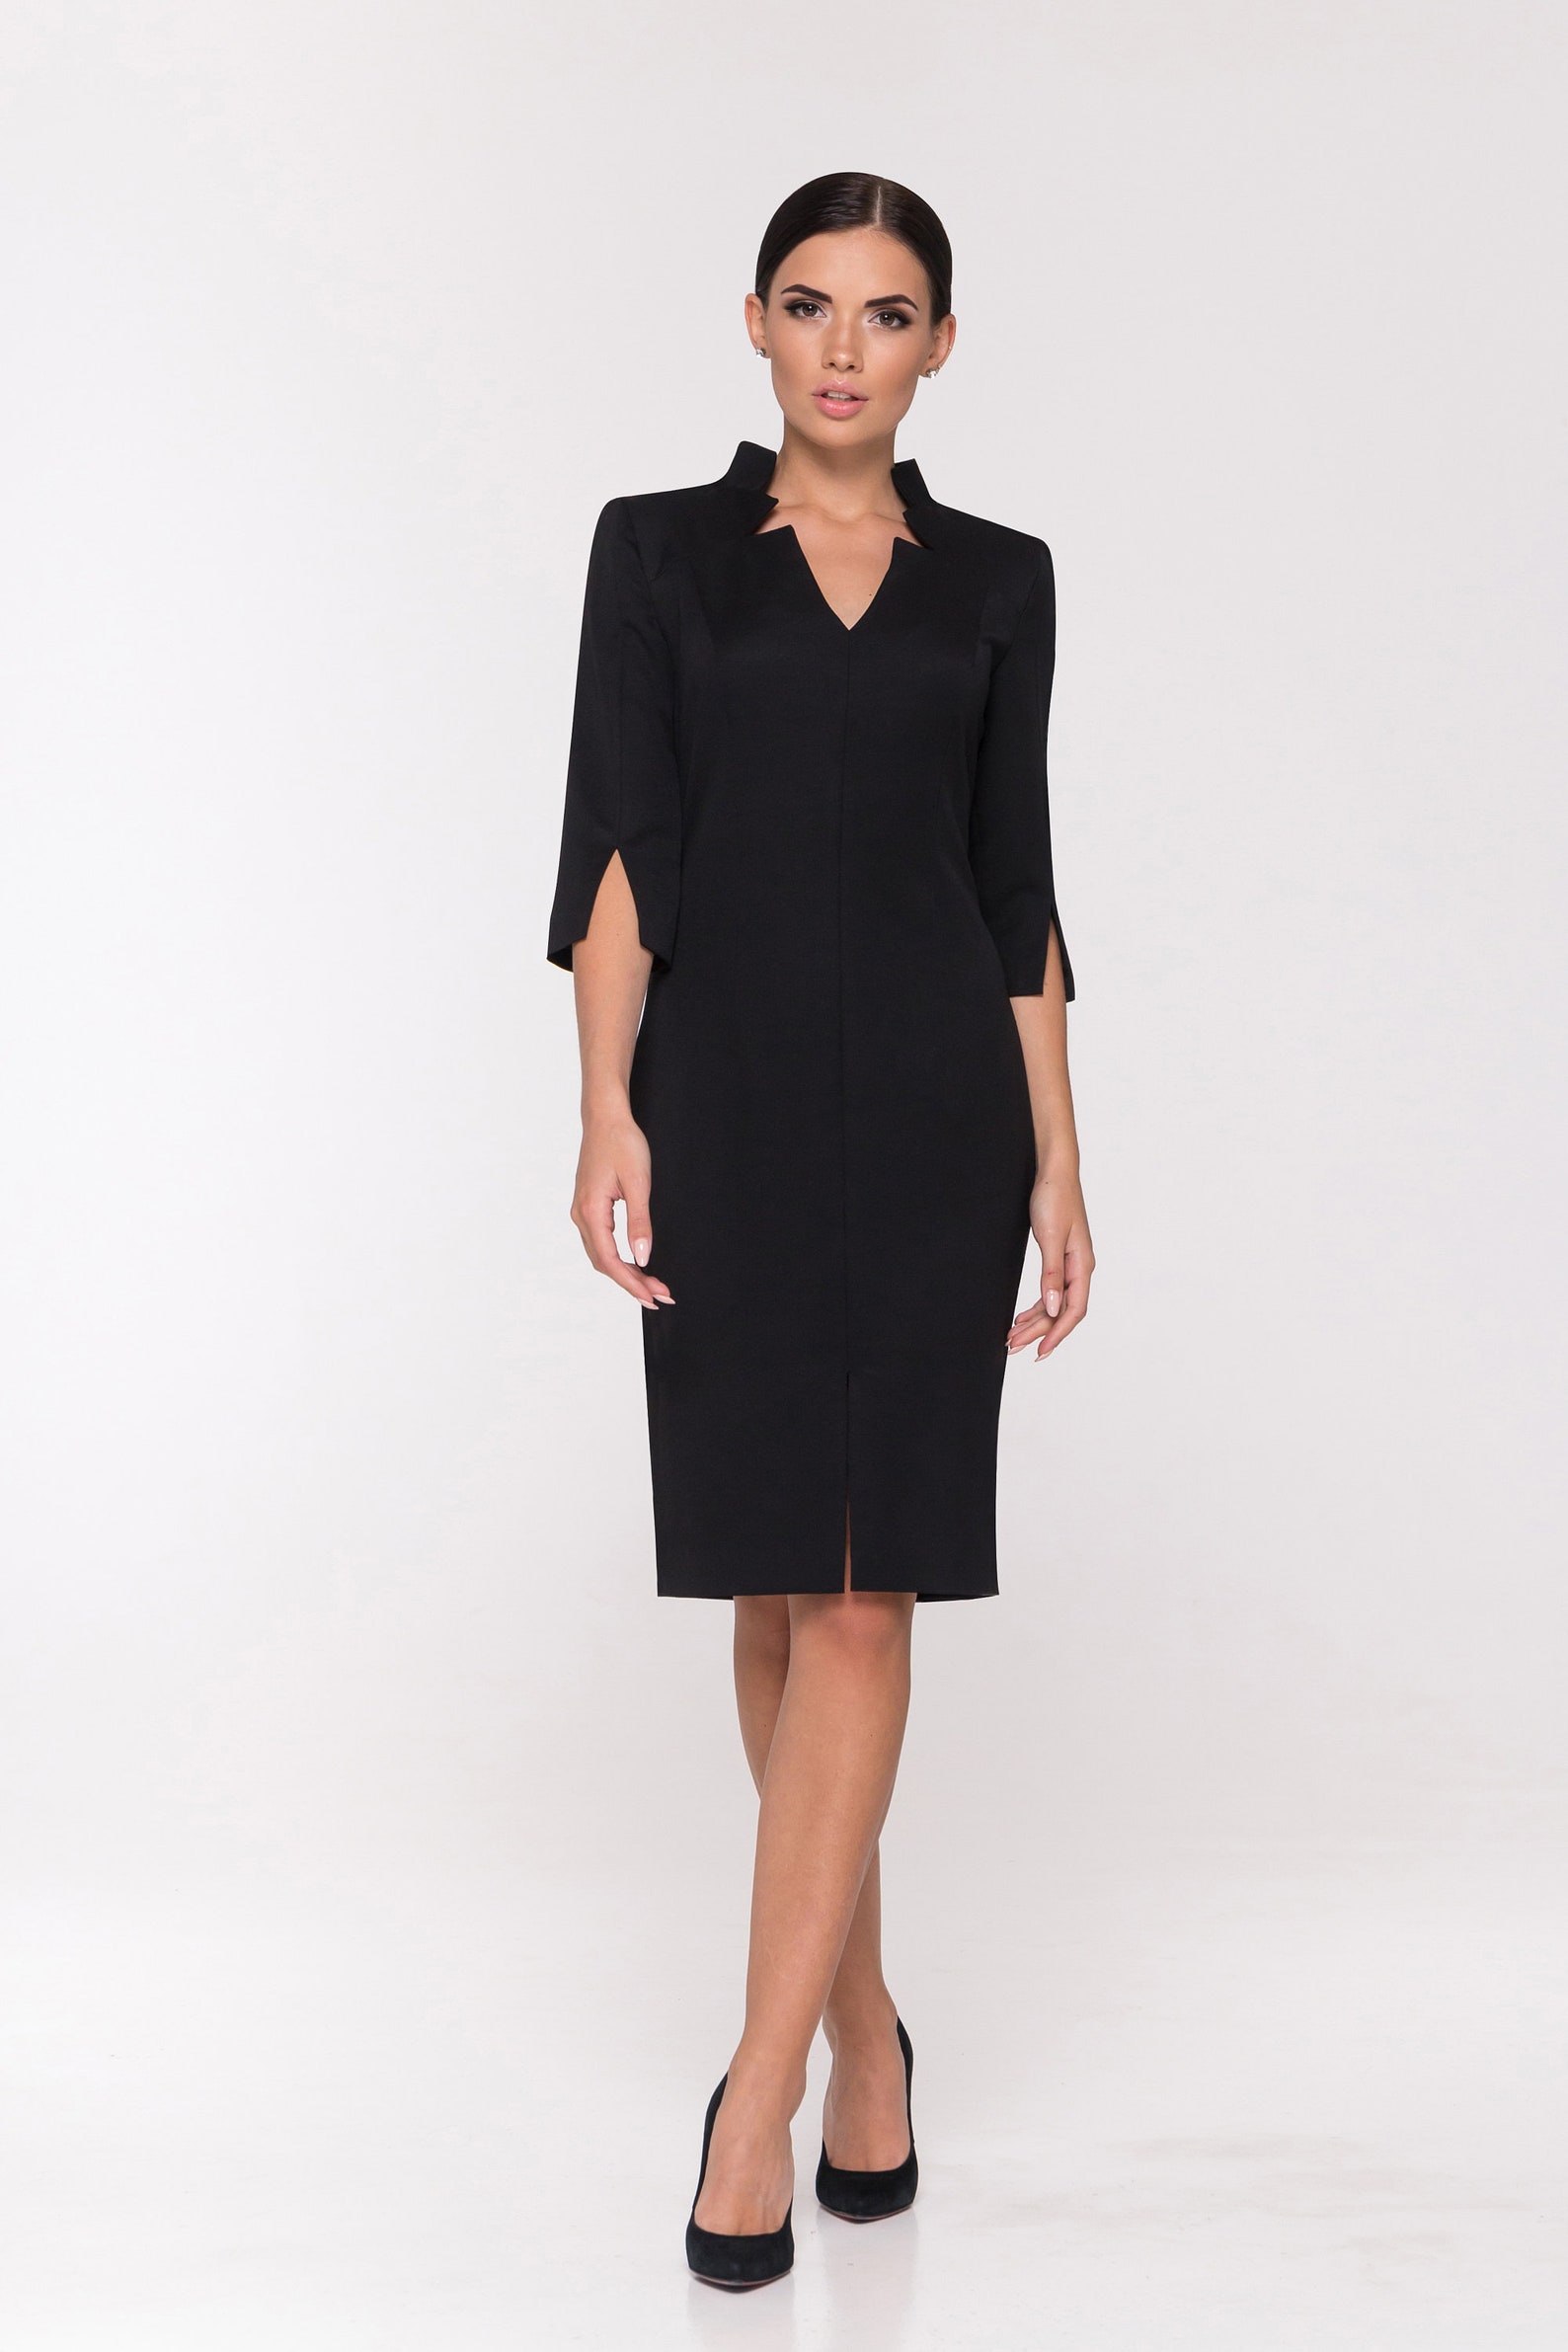 Black pencil high neck midi dress Dresses for women Cocktail | Etsy